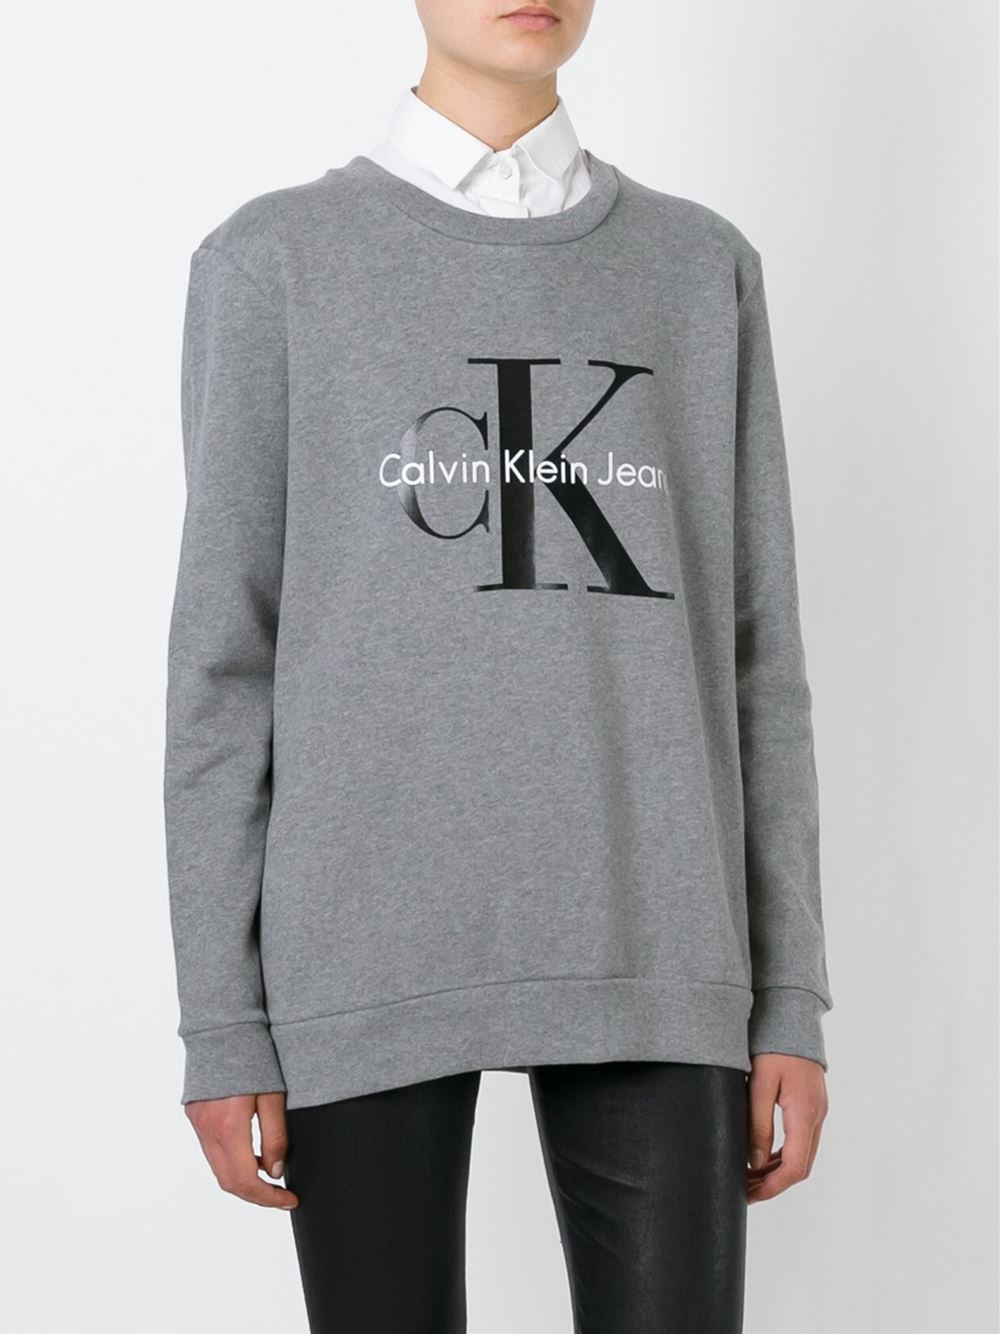 Calvin klein jeans Logo Print Sweatshirt in Gray for Men (grey) | Lyst